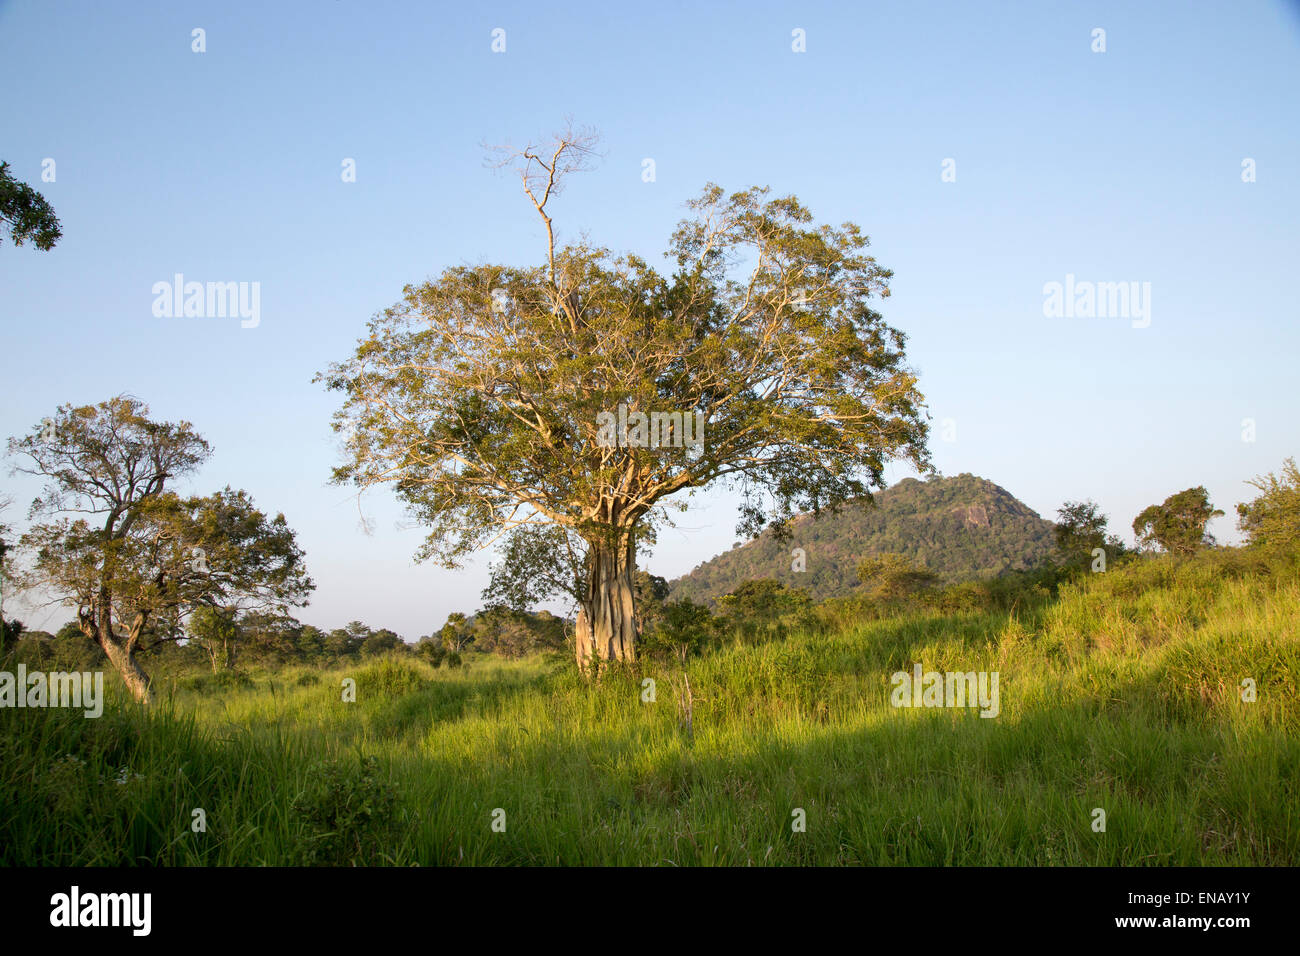 Lowland dry forest vegetation, Hurulu Eco Park biosphere reserve, Habarana, Anuradhapura District, Sri Lanka, Asia Stock Photo